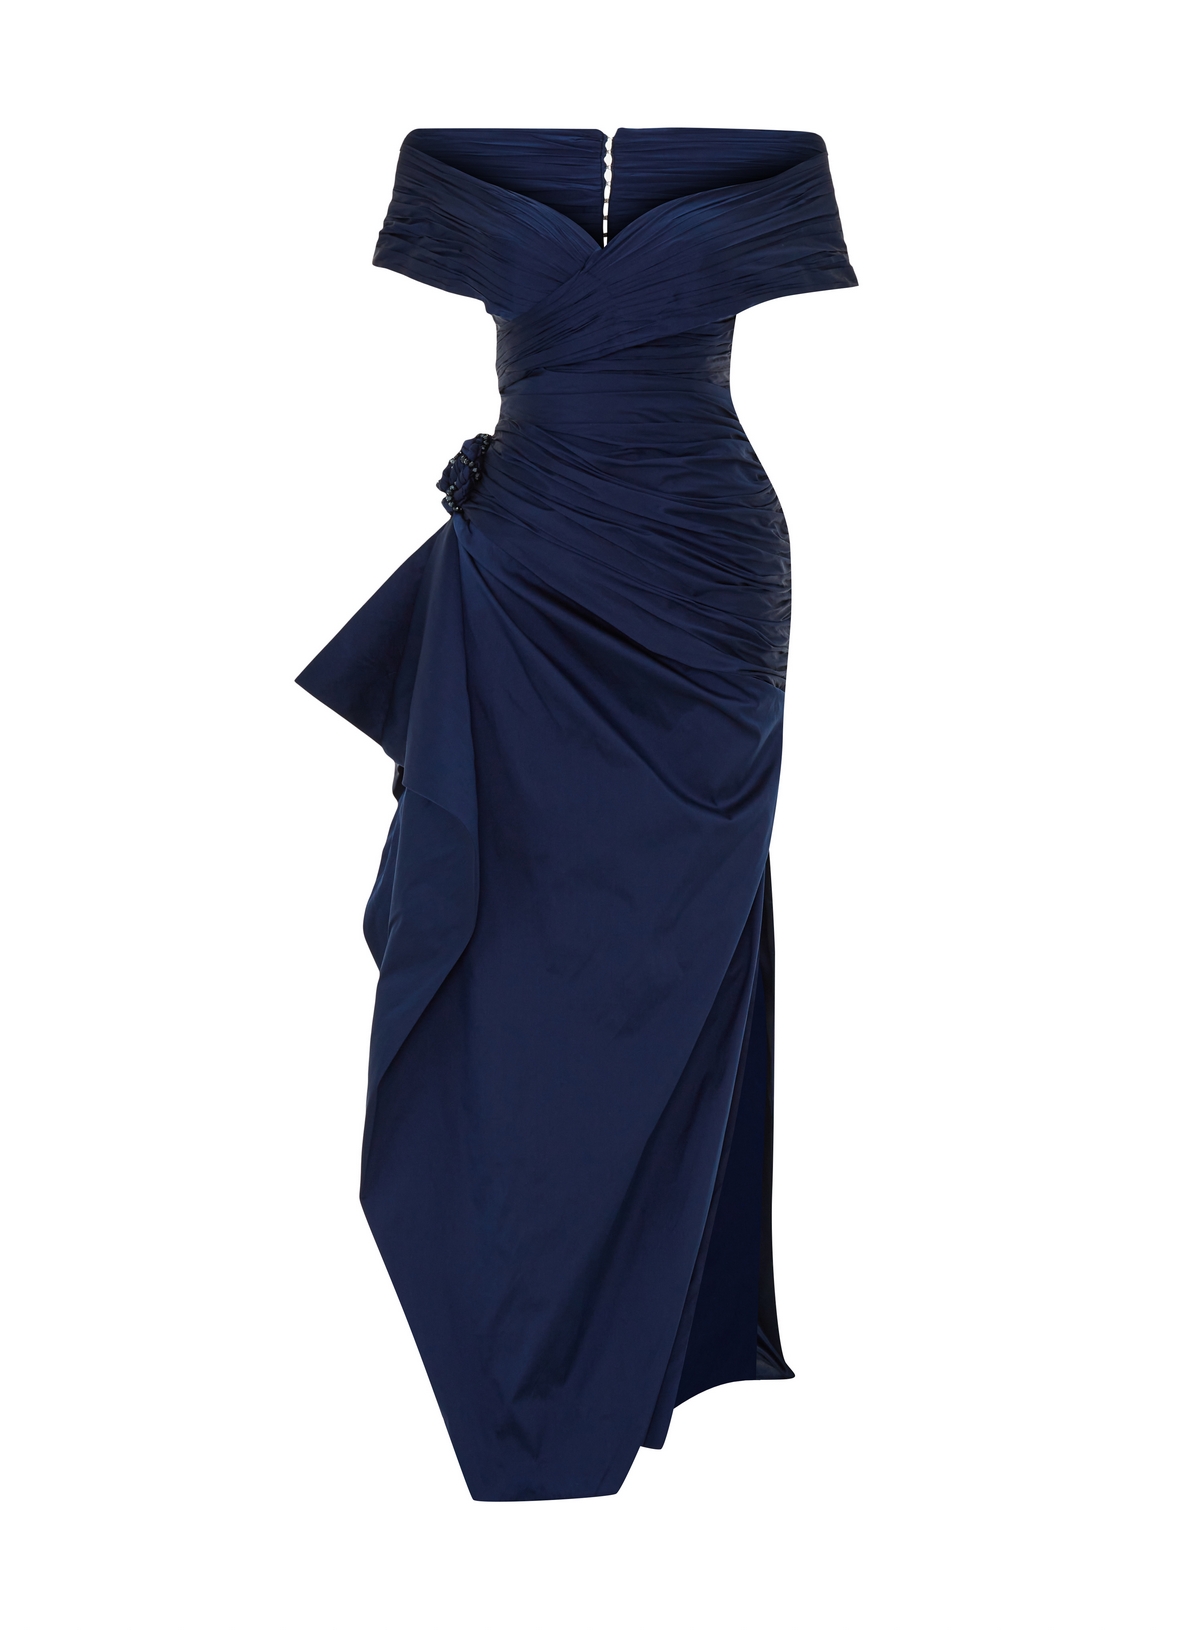 Picture of Navy Blue Alıce Dress